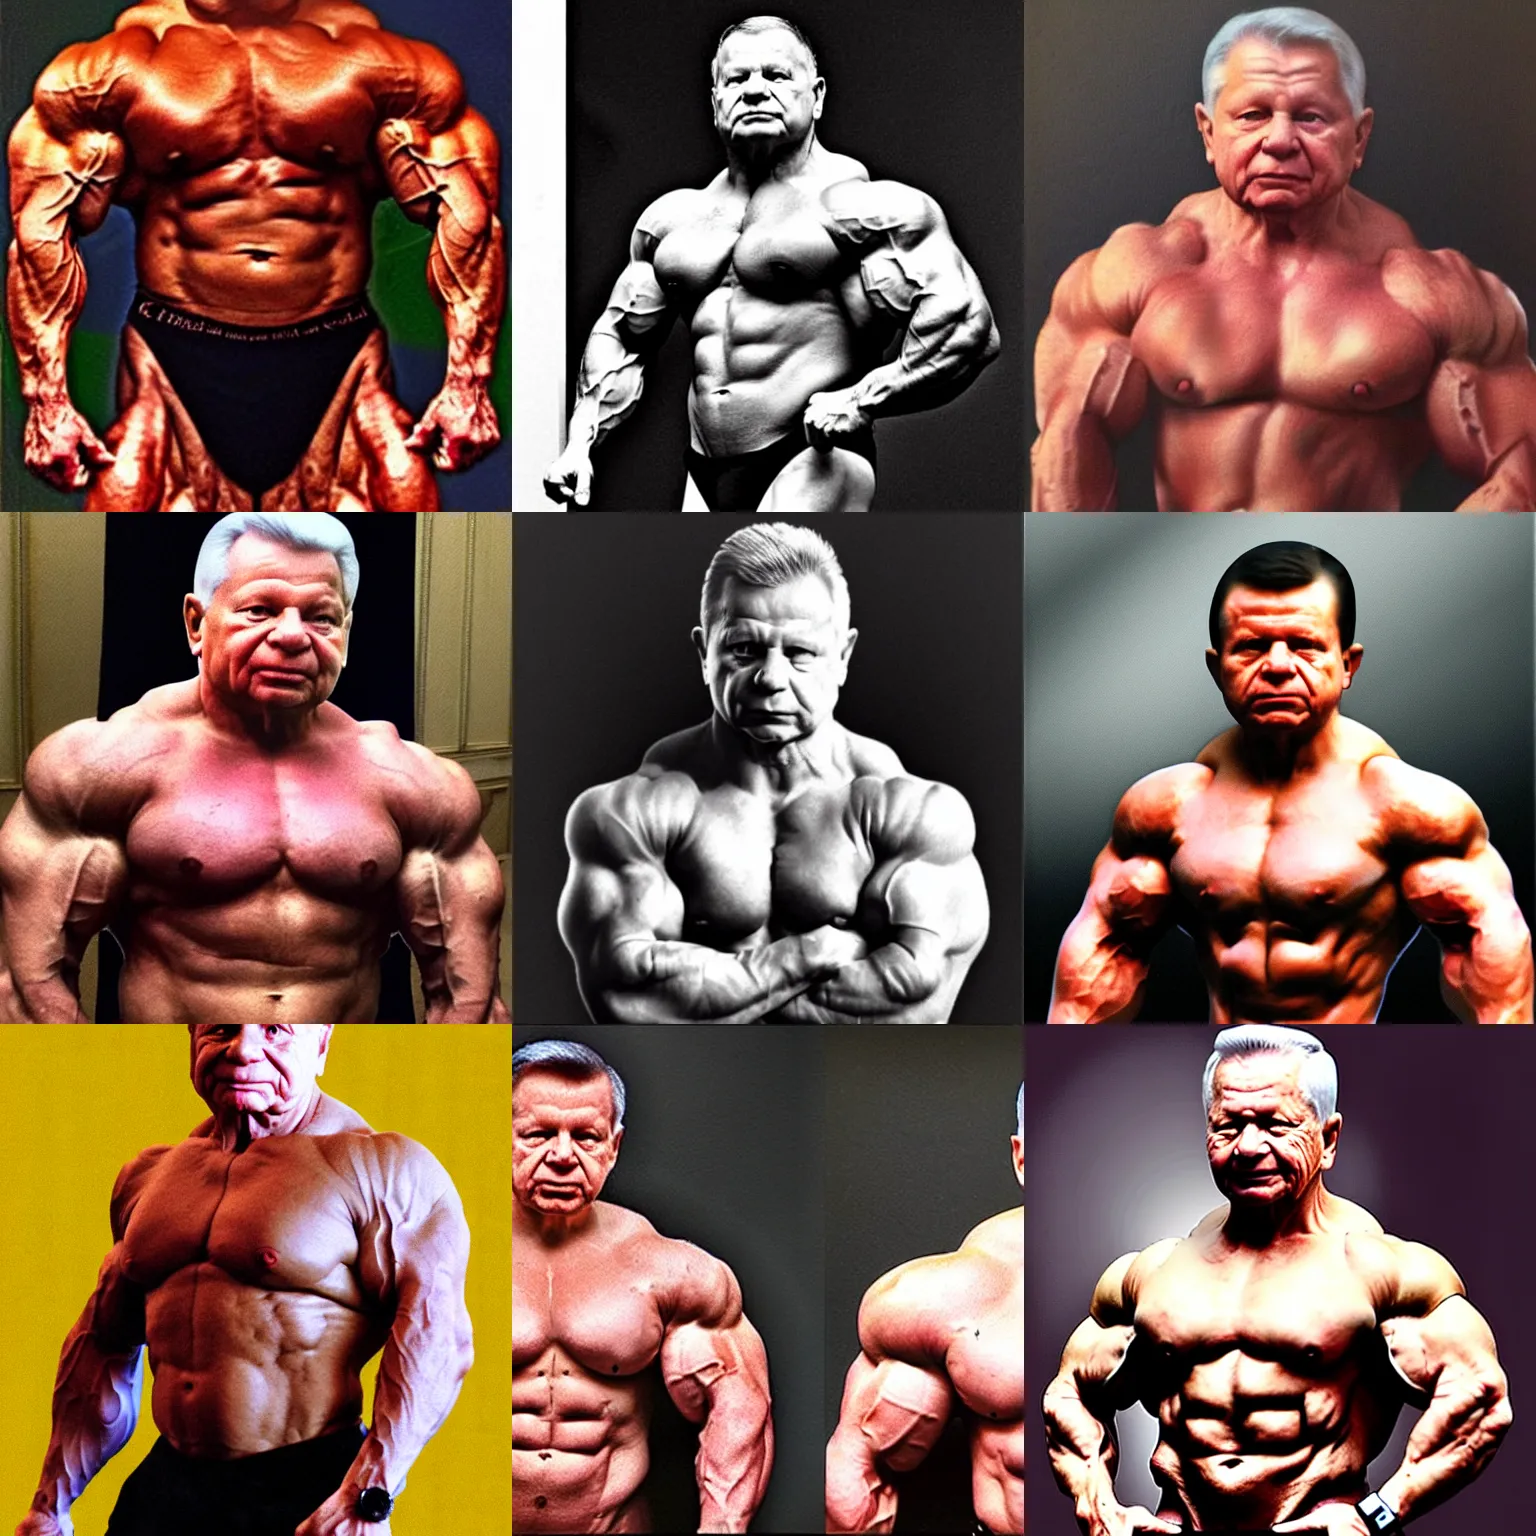 Prompt: lech kaczynski!! as a bodybuilder, photorealistic